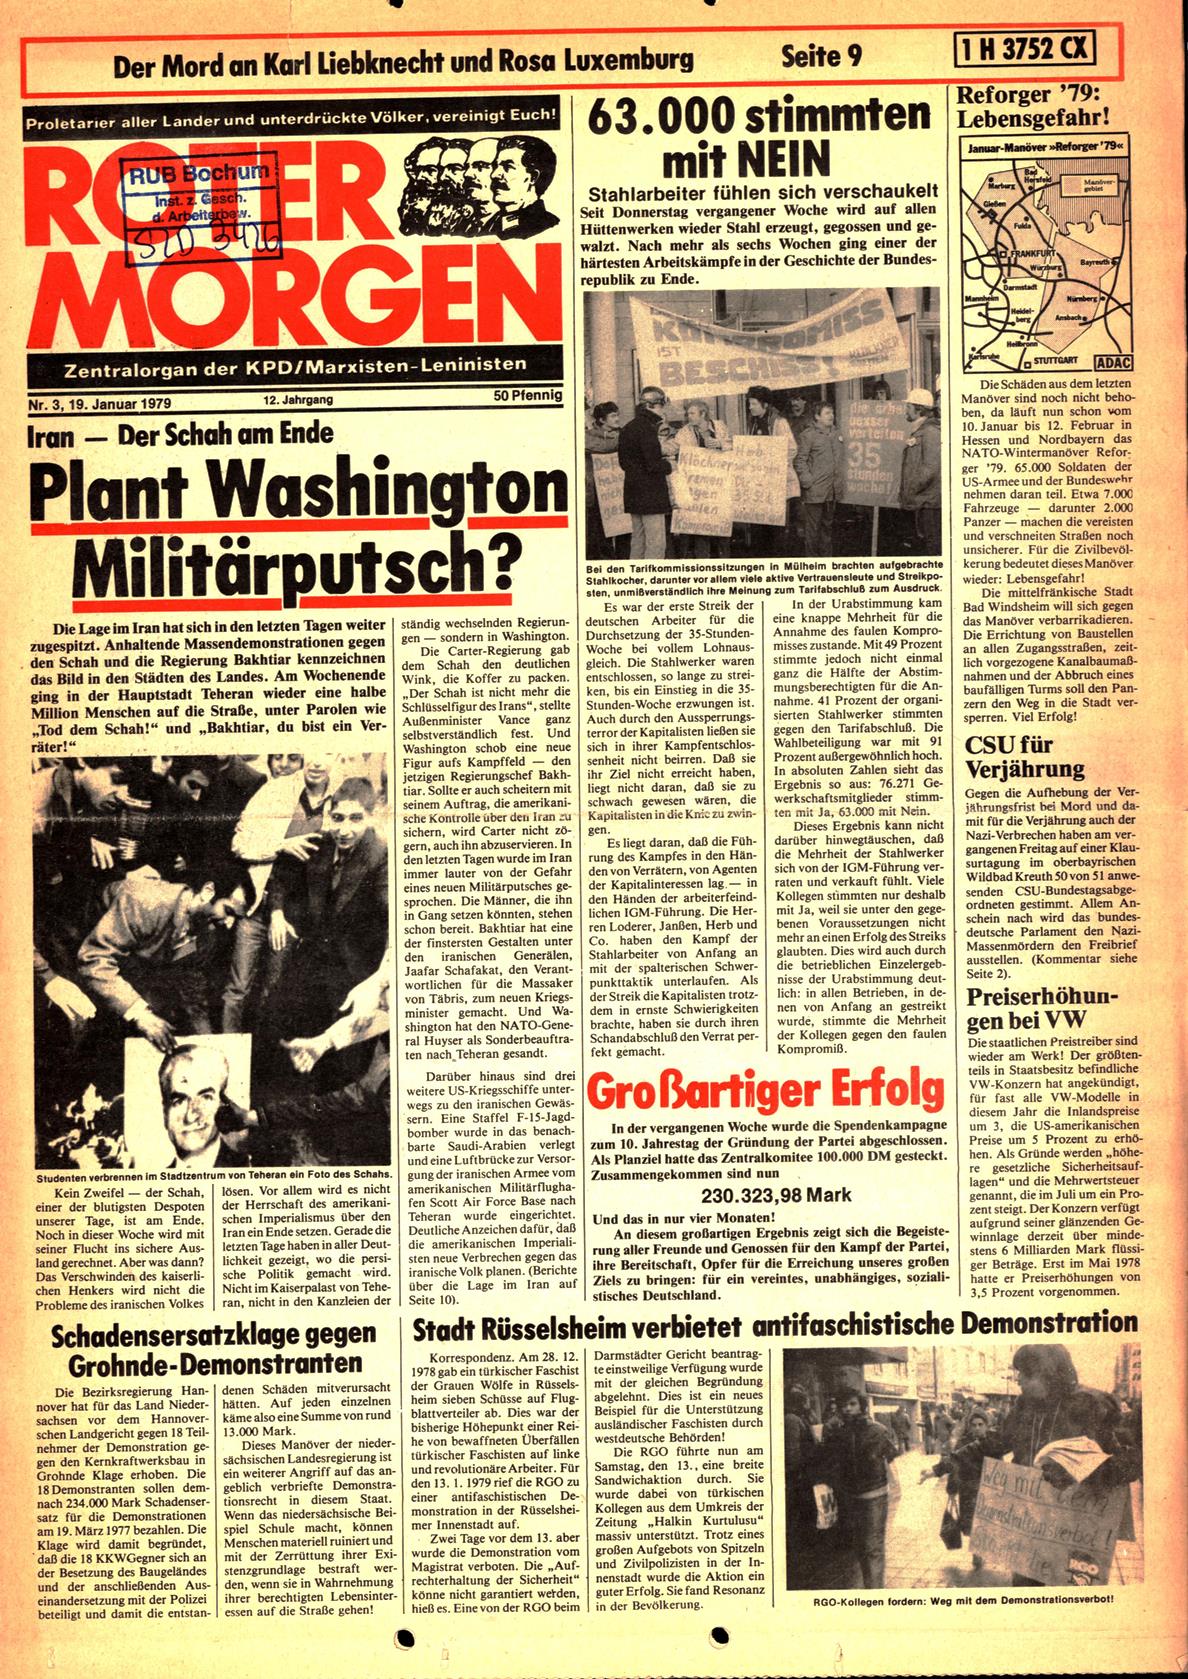 Roter Morgen, 13. Jg., 19. Januar 1979, Nr. 3, Seite 1